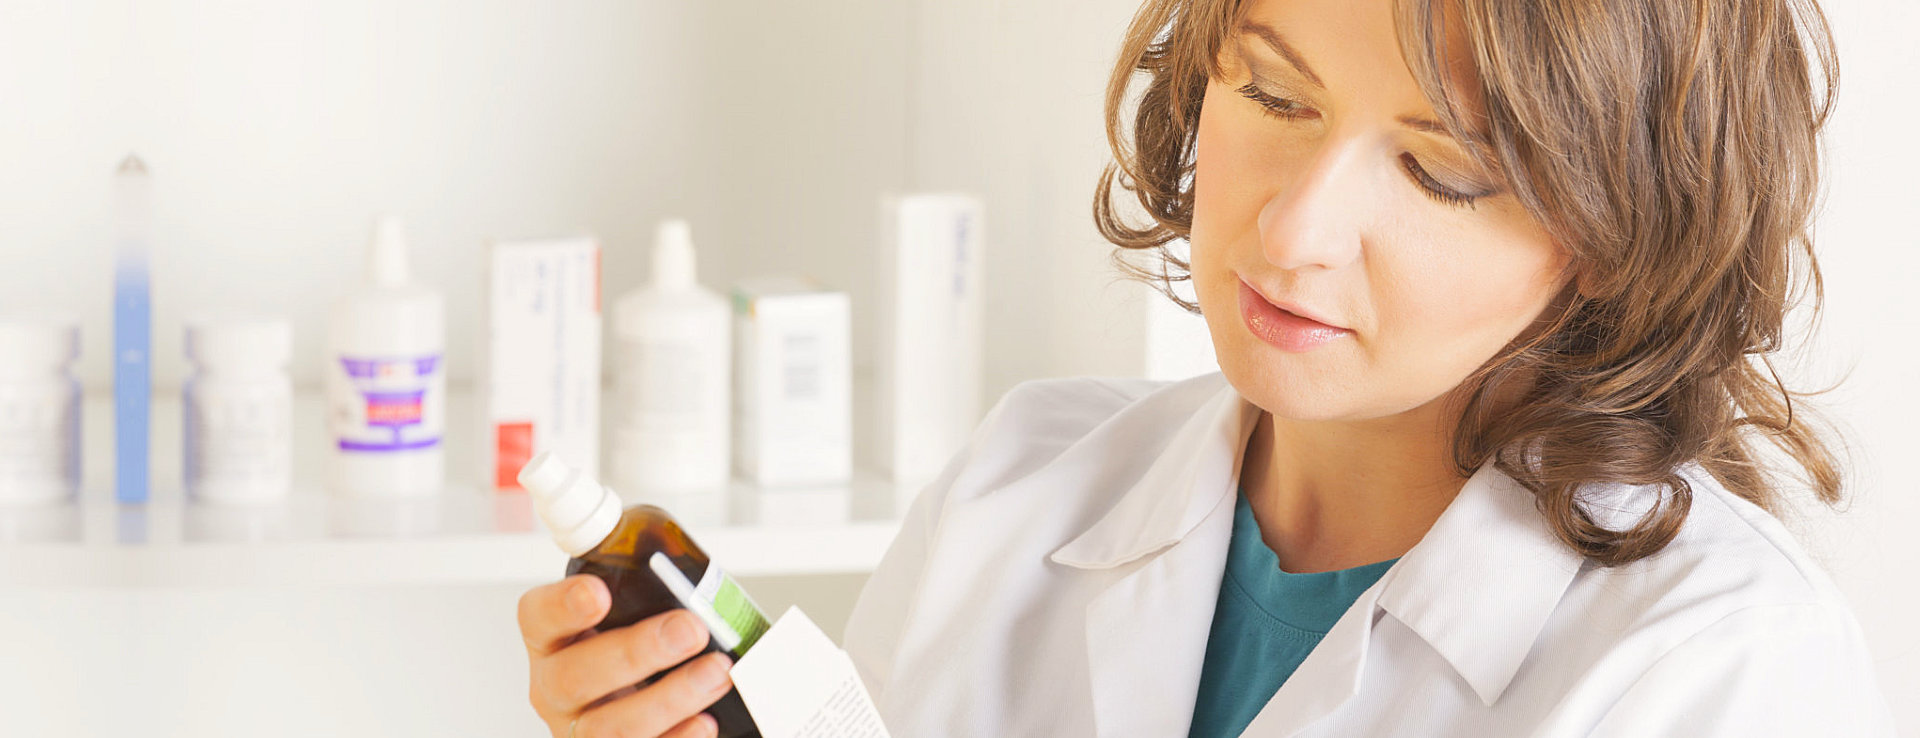 pharmacist holding a medicine